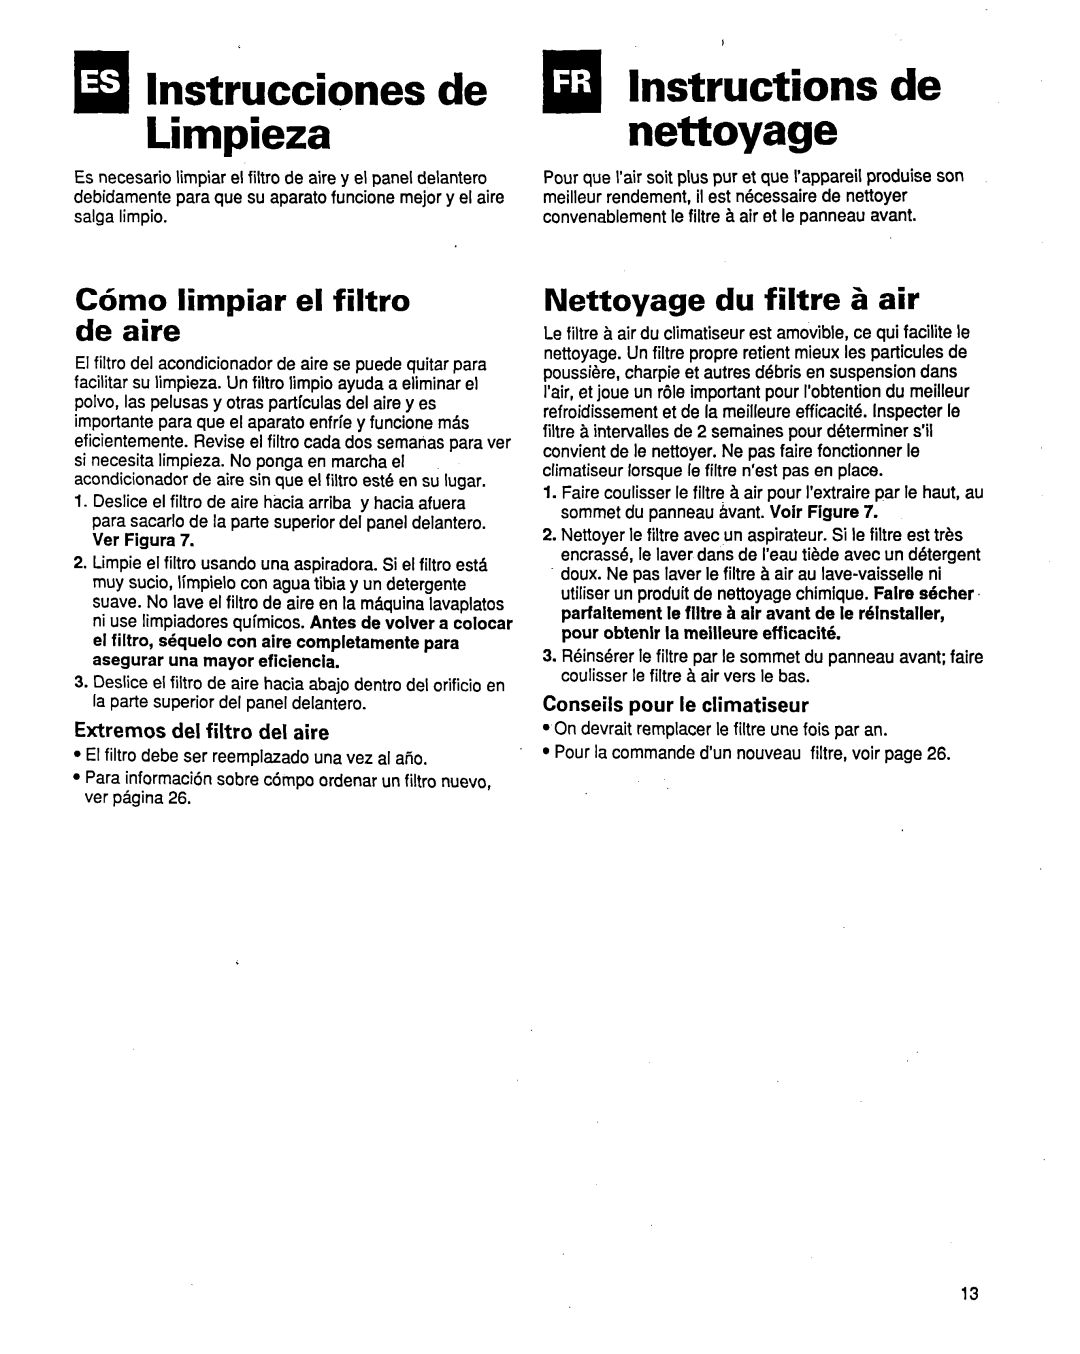 Whirlpool ACM184XE1 manual q lnstrucciones de Limpieza, mlInstructions de nettoyage, C6mo limgiar el filtro de aire 